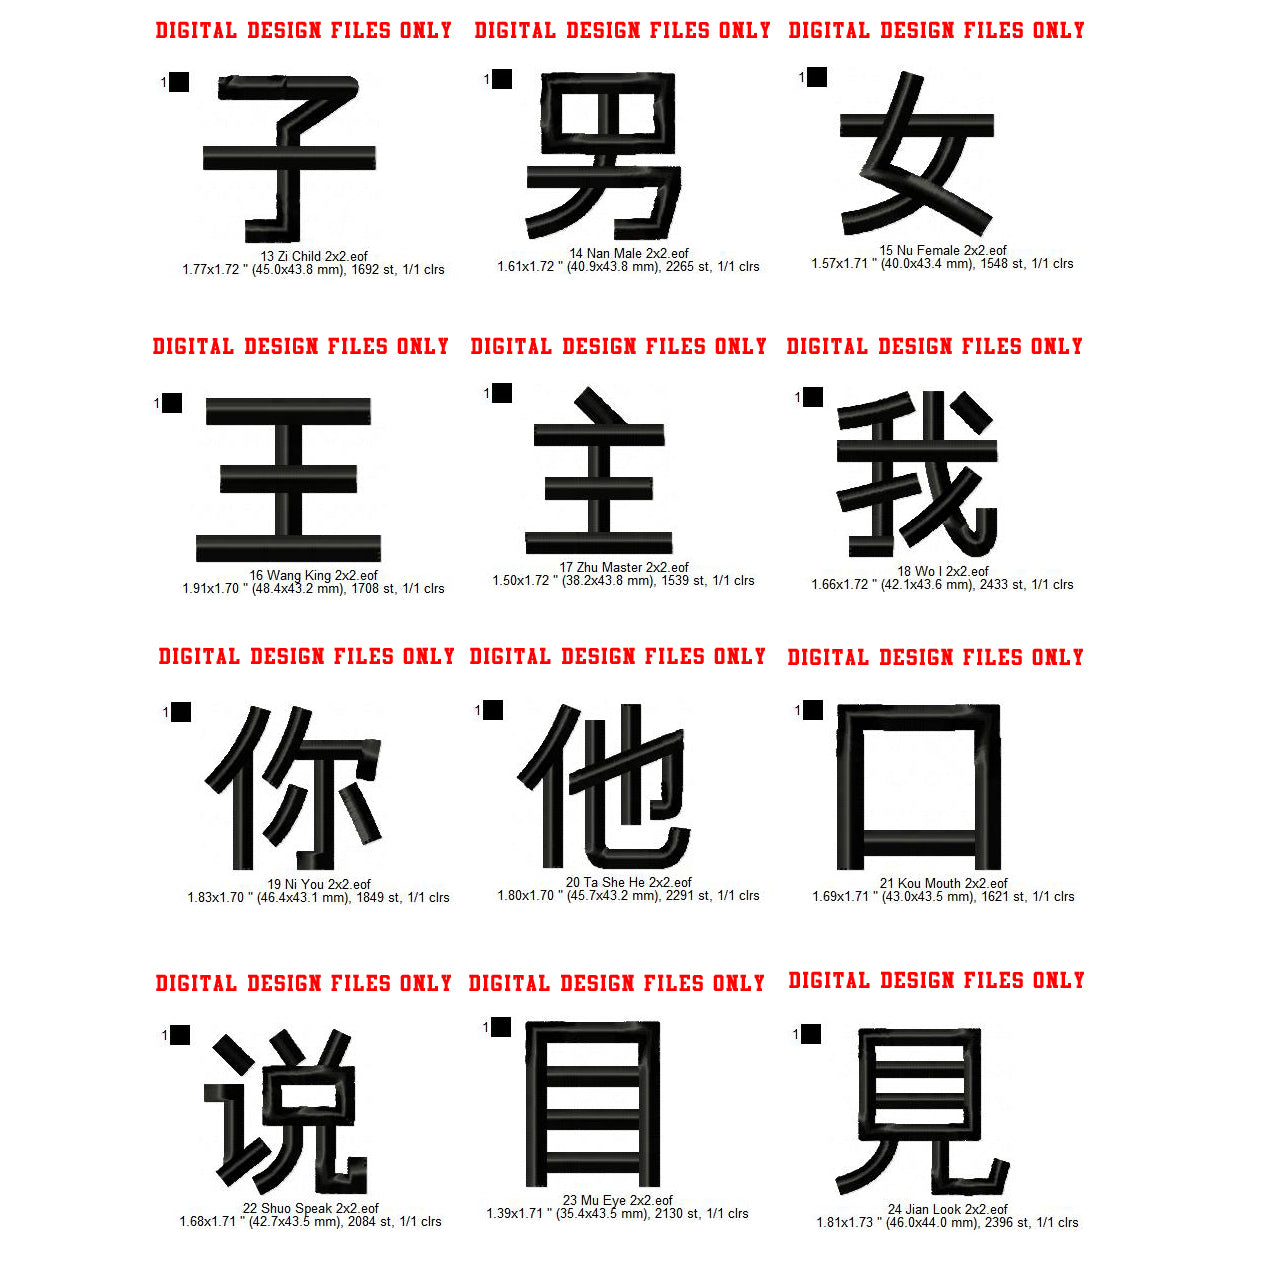 mandarin language alphabet